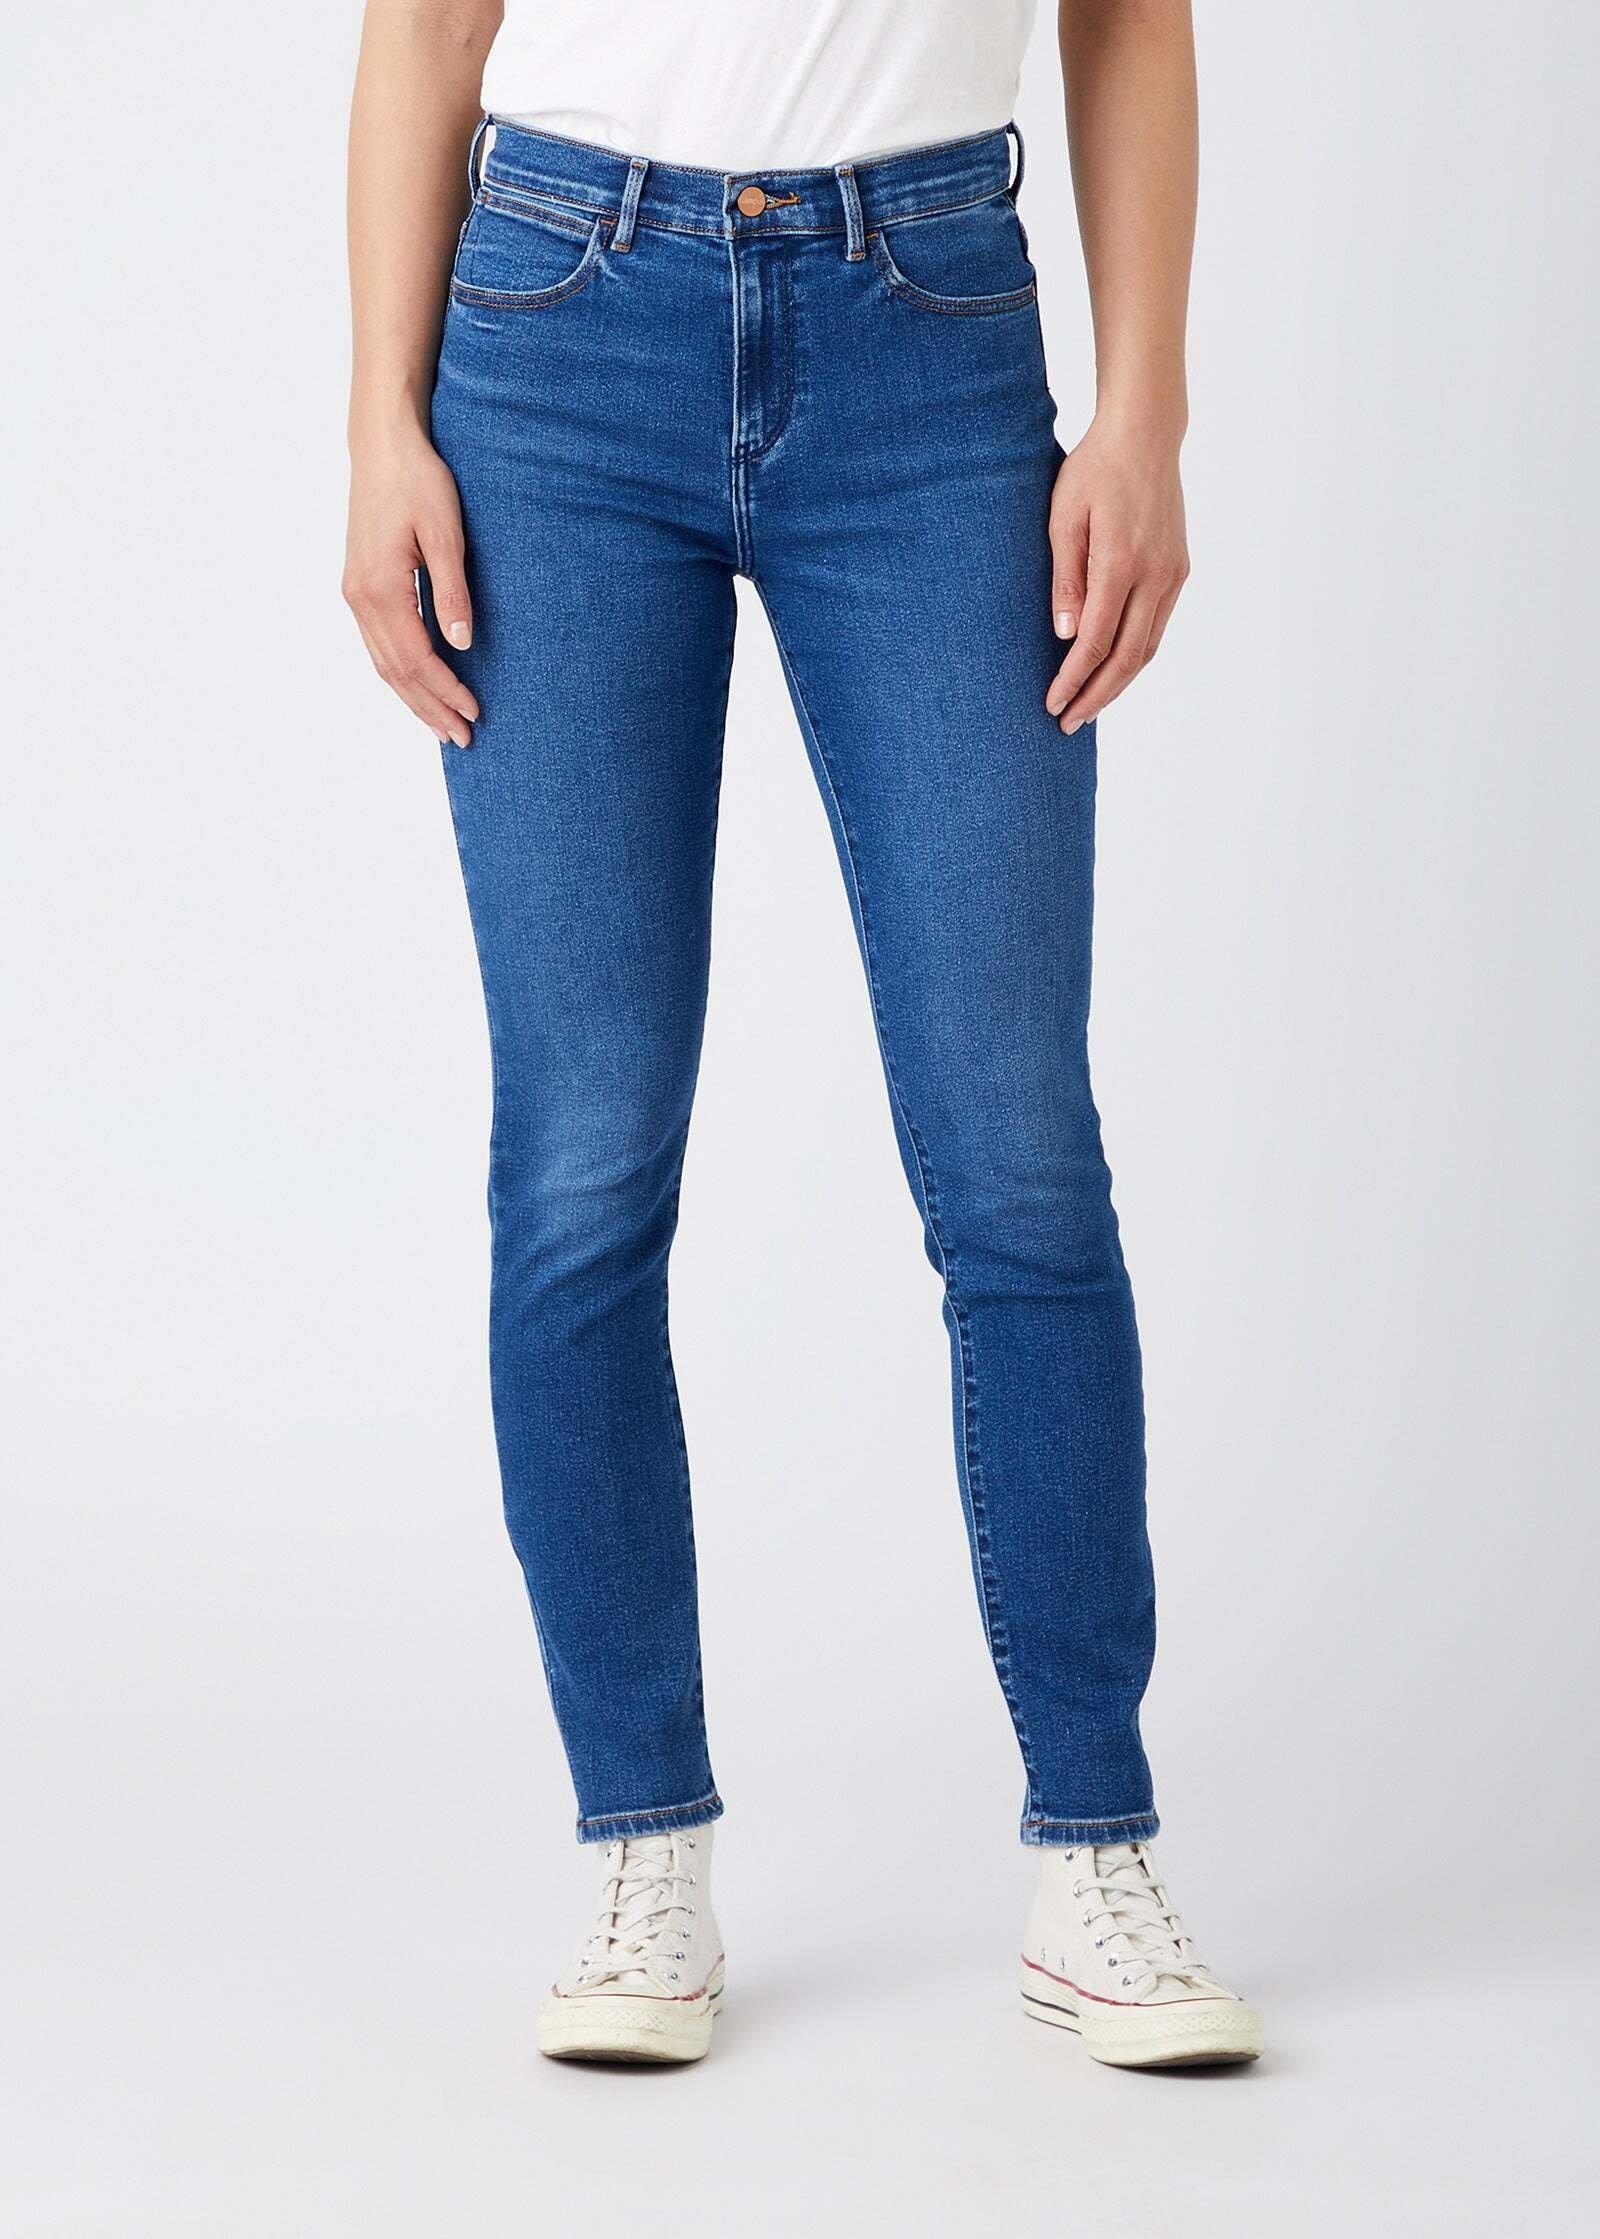 Jeans Skinny Fit High Rise Damen Blau Denim L34/W28 von Wrangler